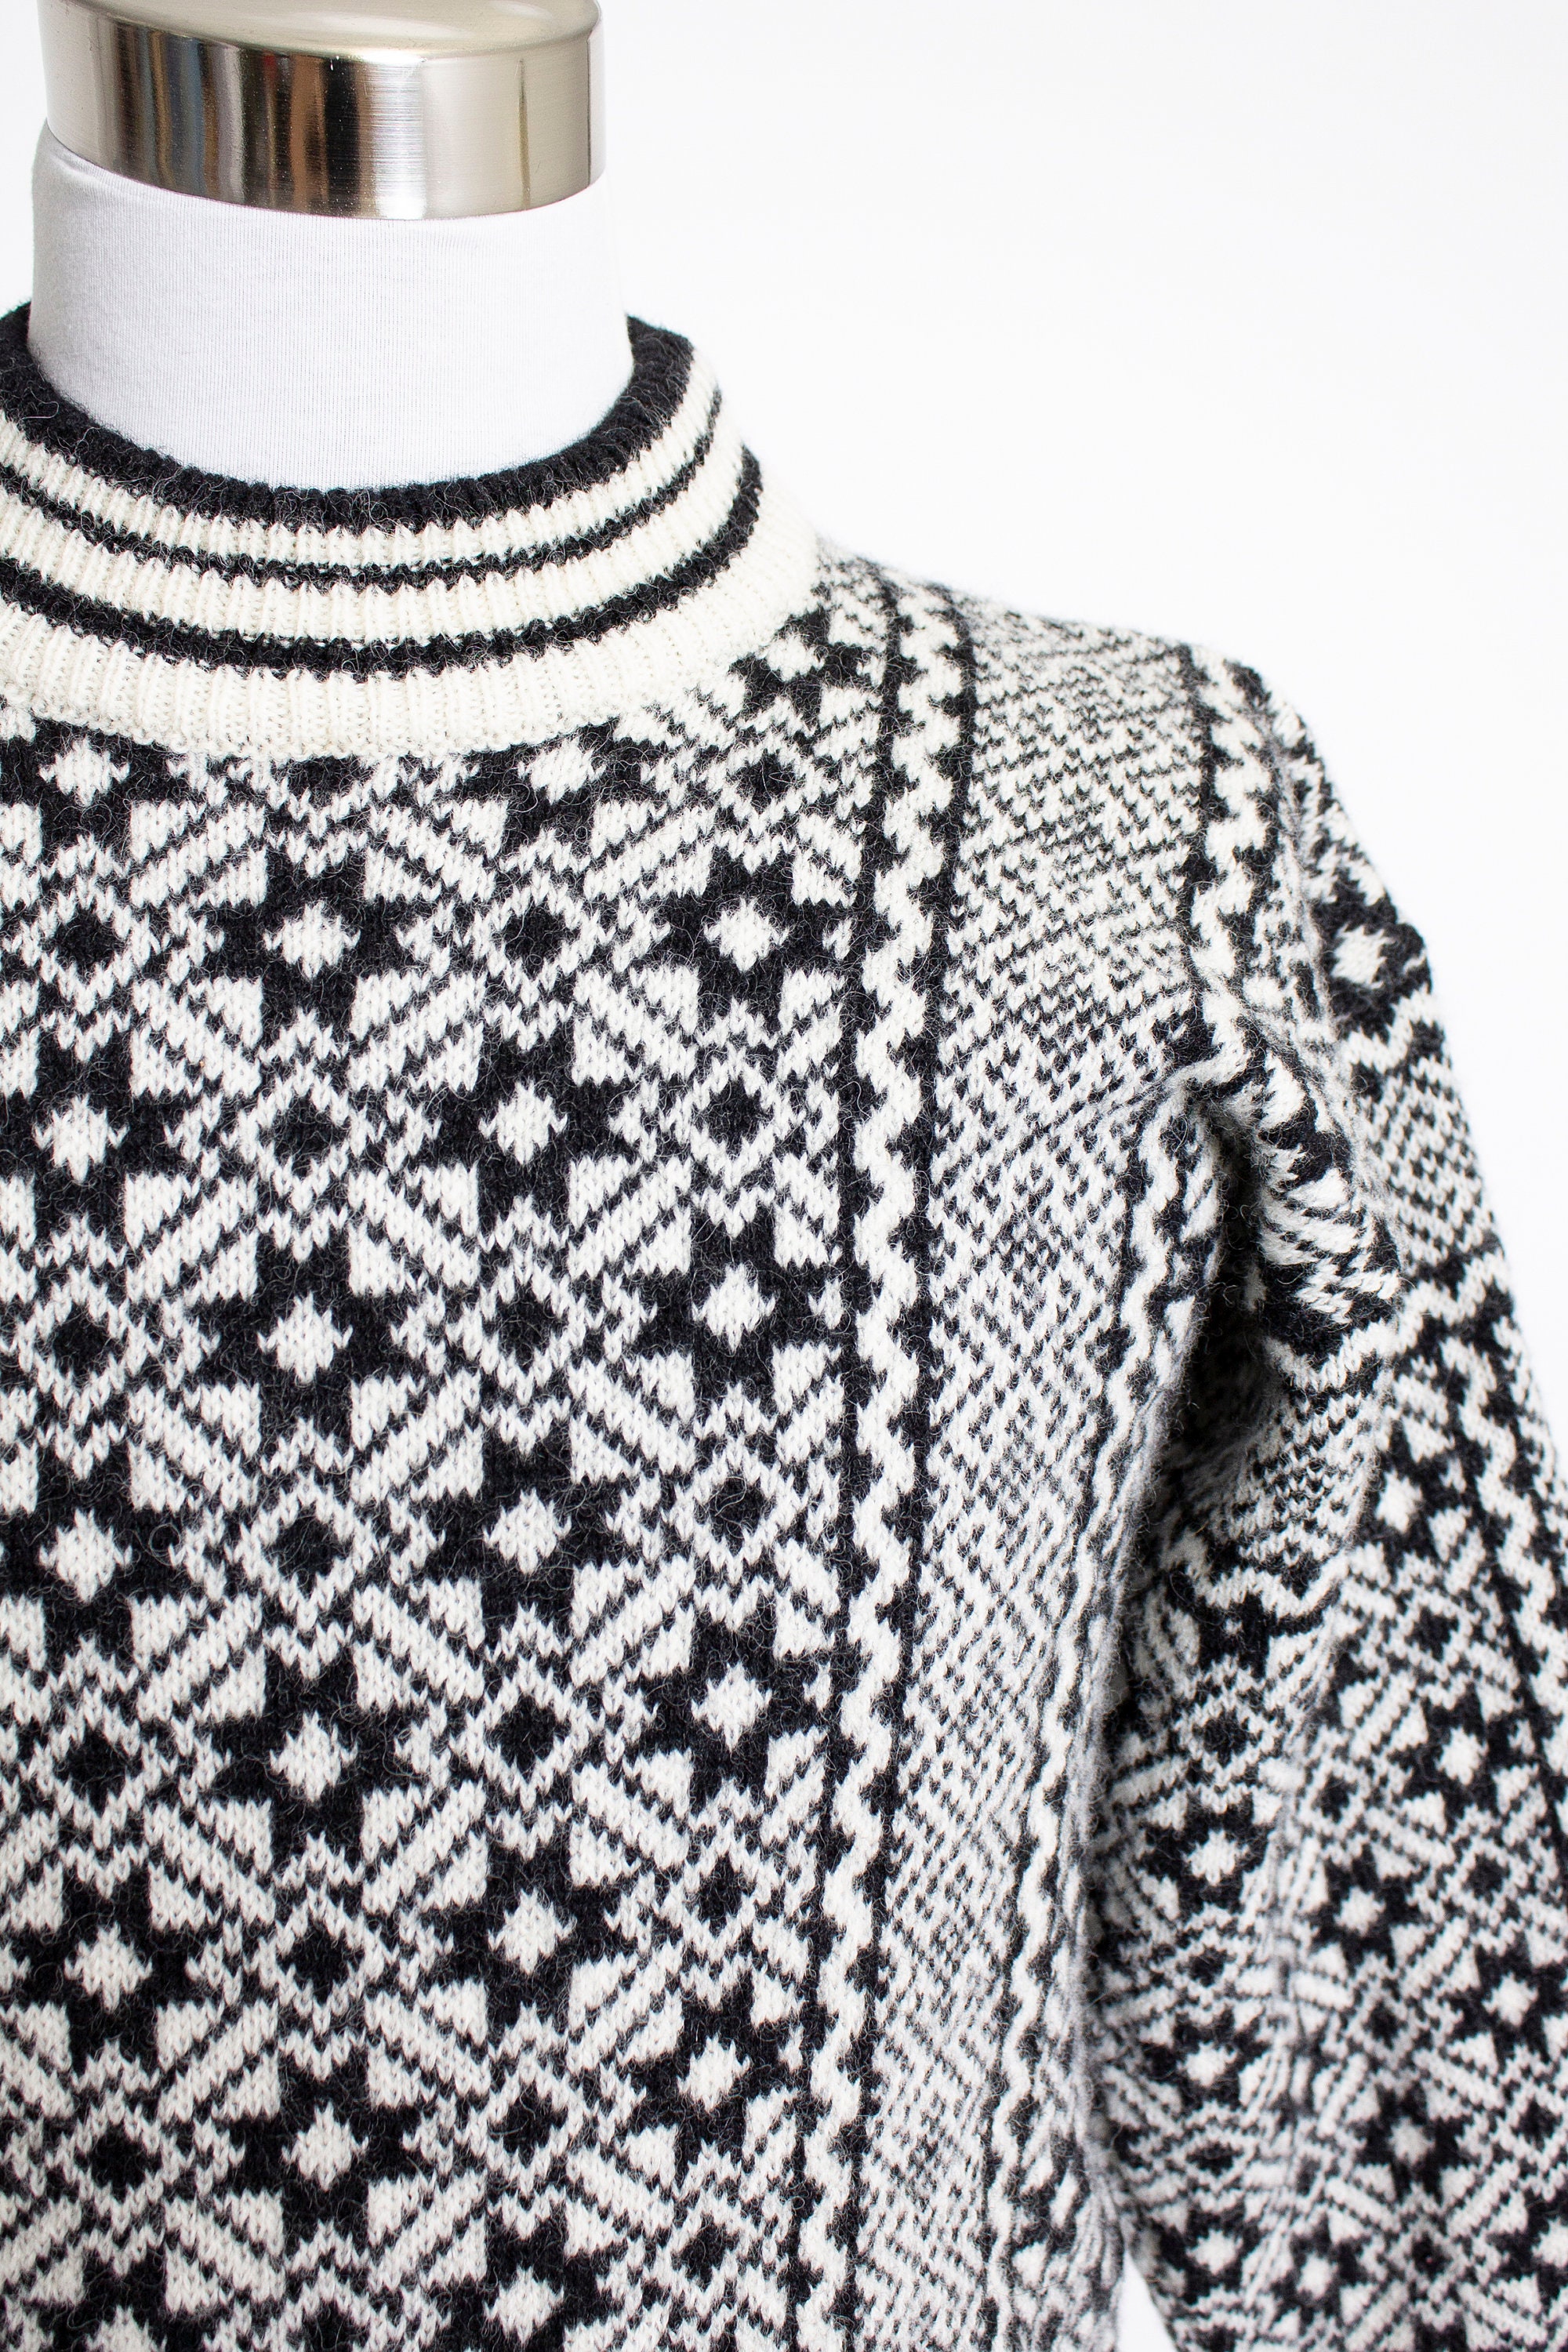 Vintage 1980s Norwegian Sweater Wool Knit Black White Pullover | Etsy